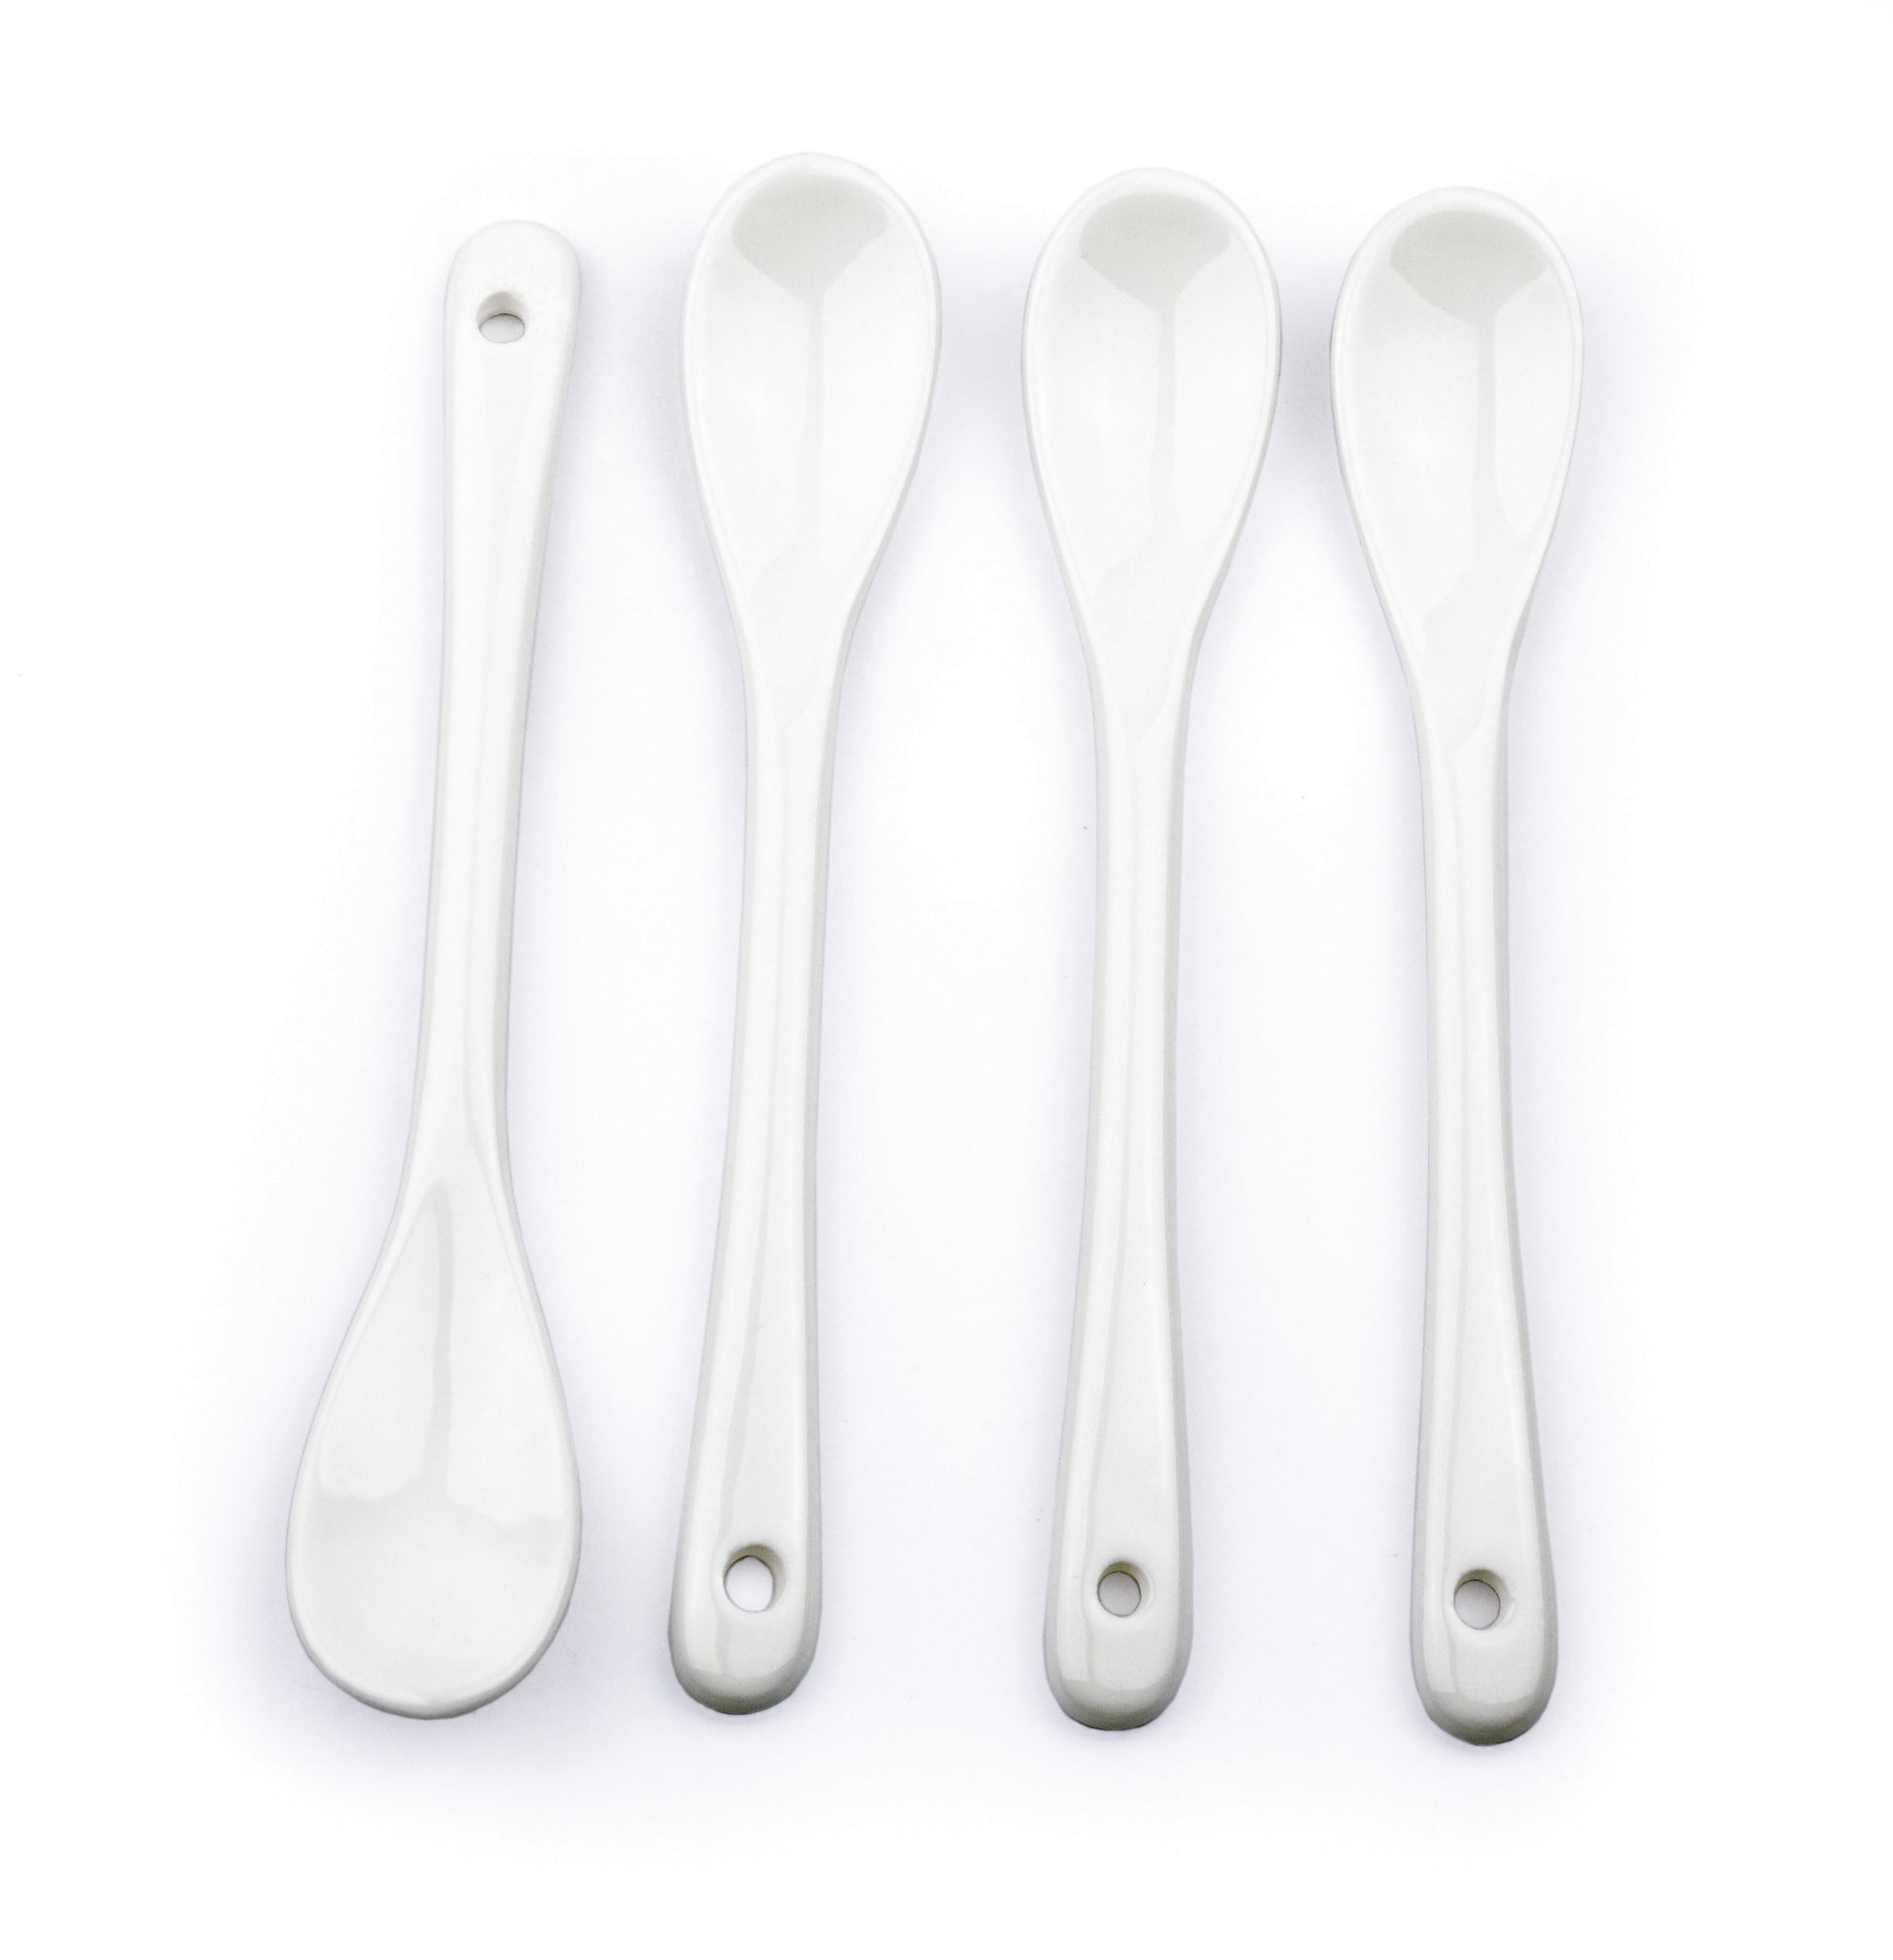 4 white ceramic spoons on white background.